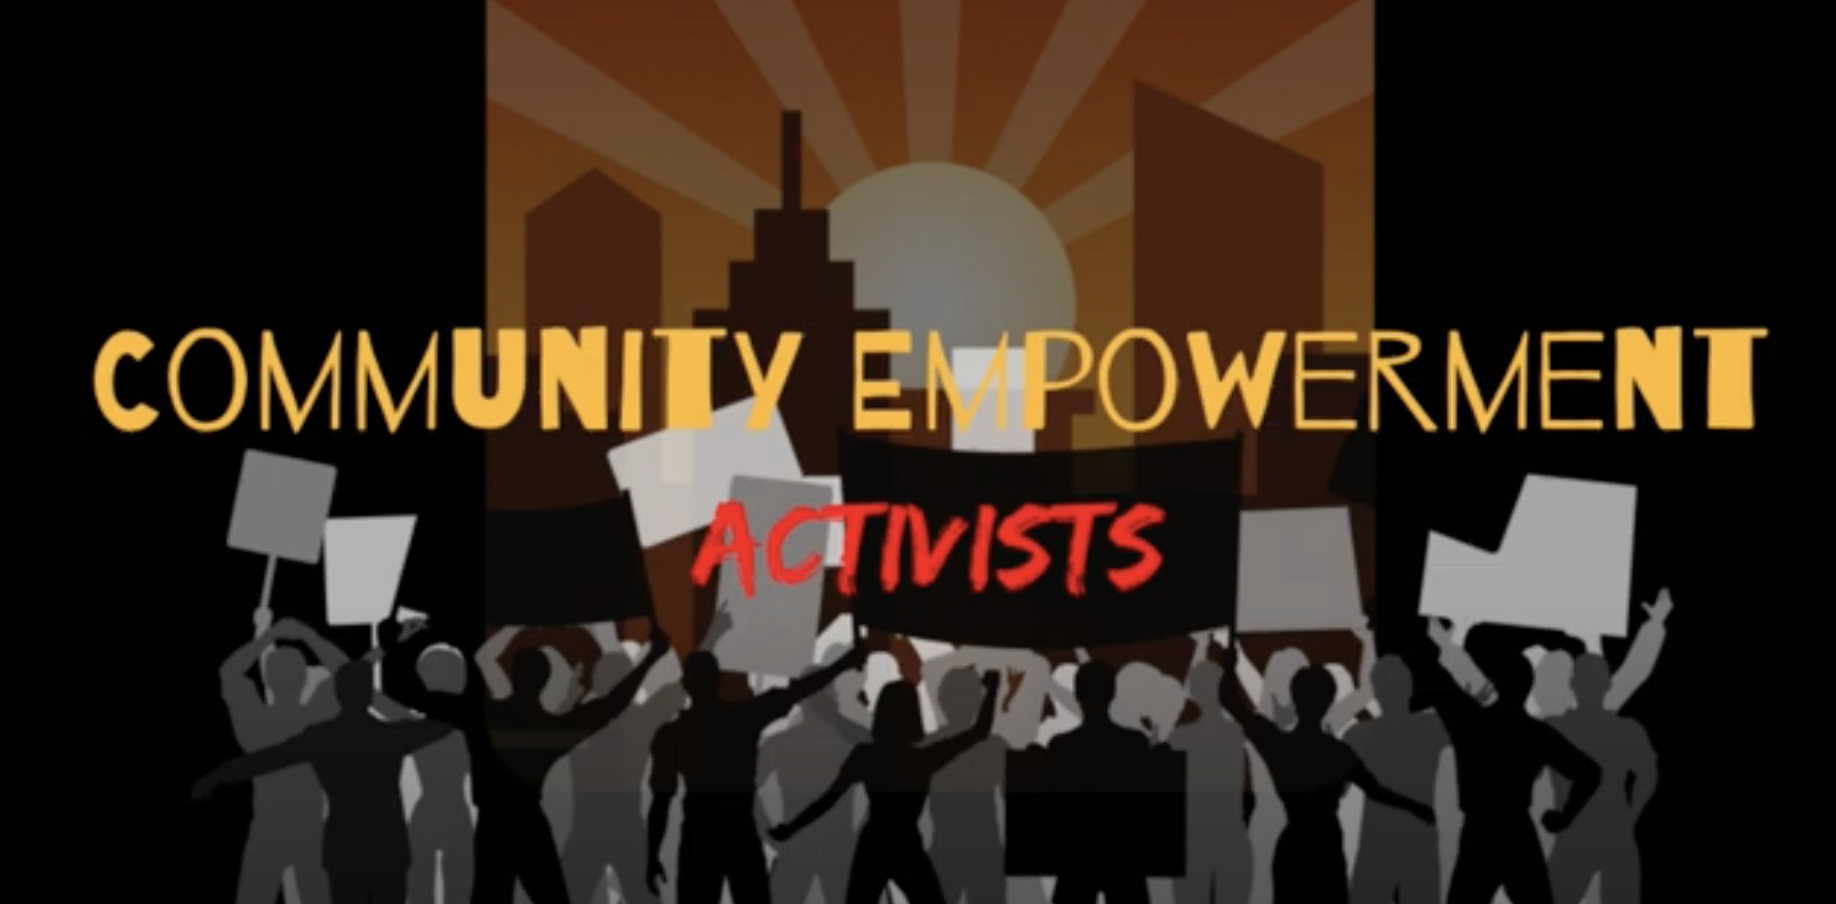 Community empowerment activists